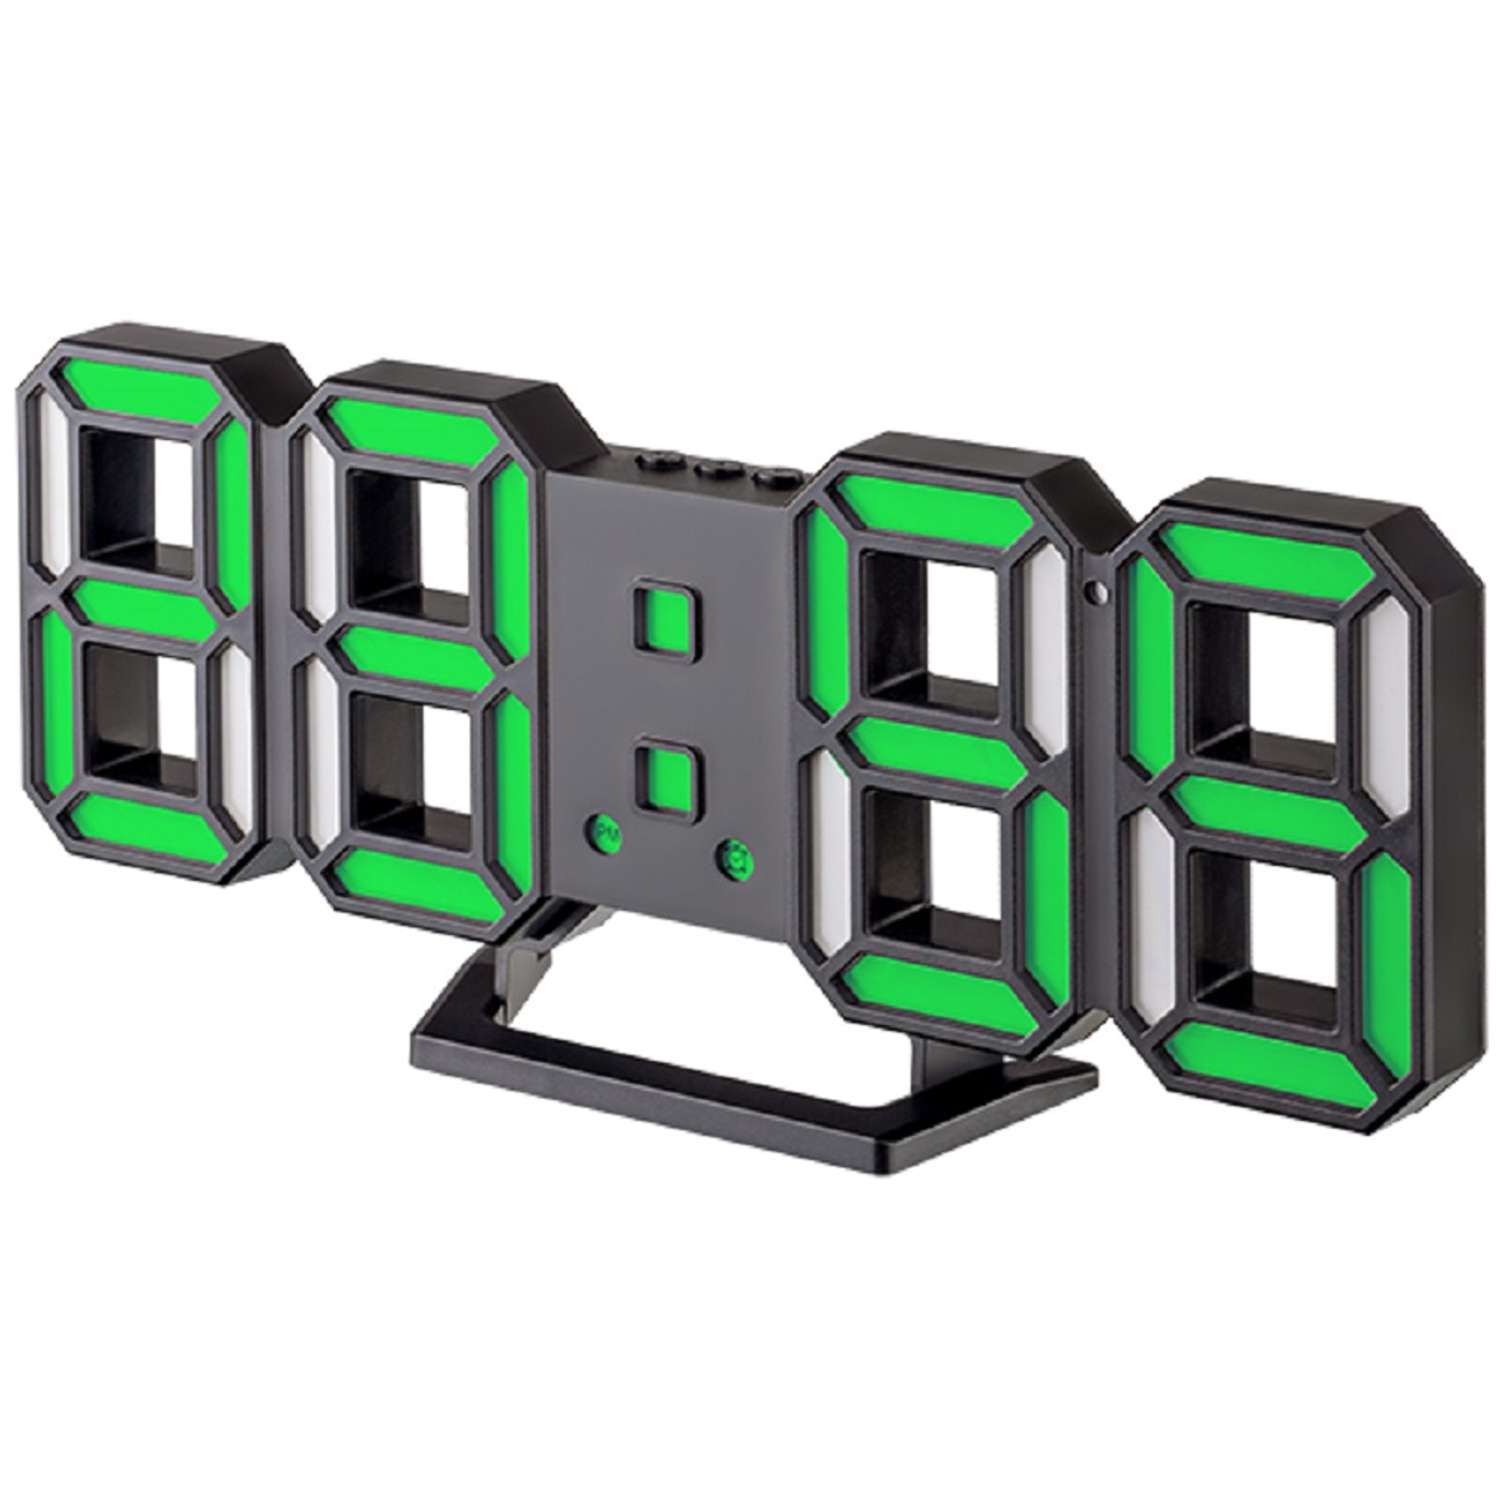 LED часы-будильник Perfeo LUMINOUS 2 черный корпус зелёная подсветка PF-6111 - фото 1